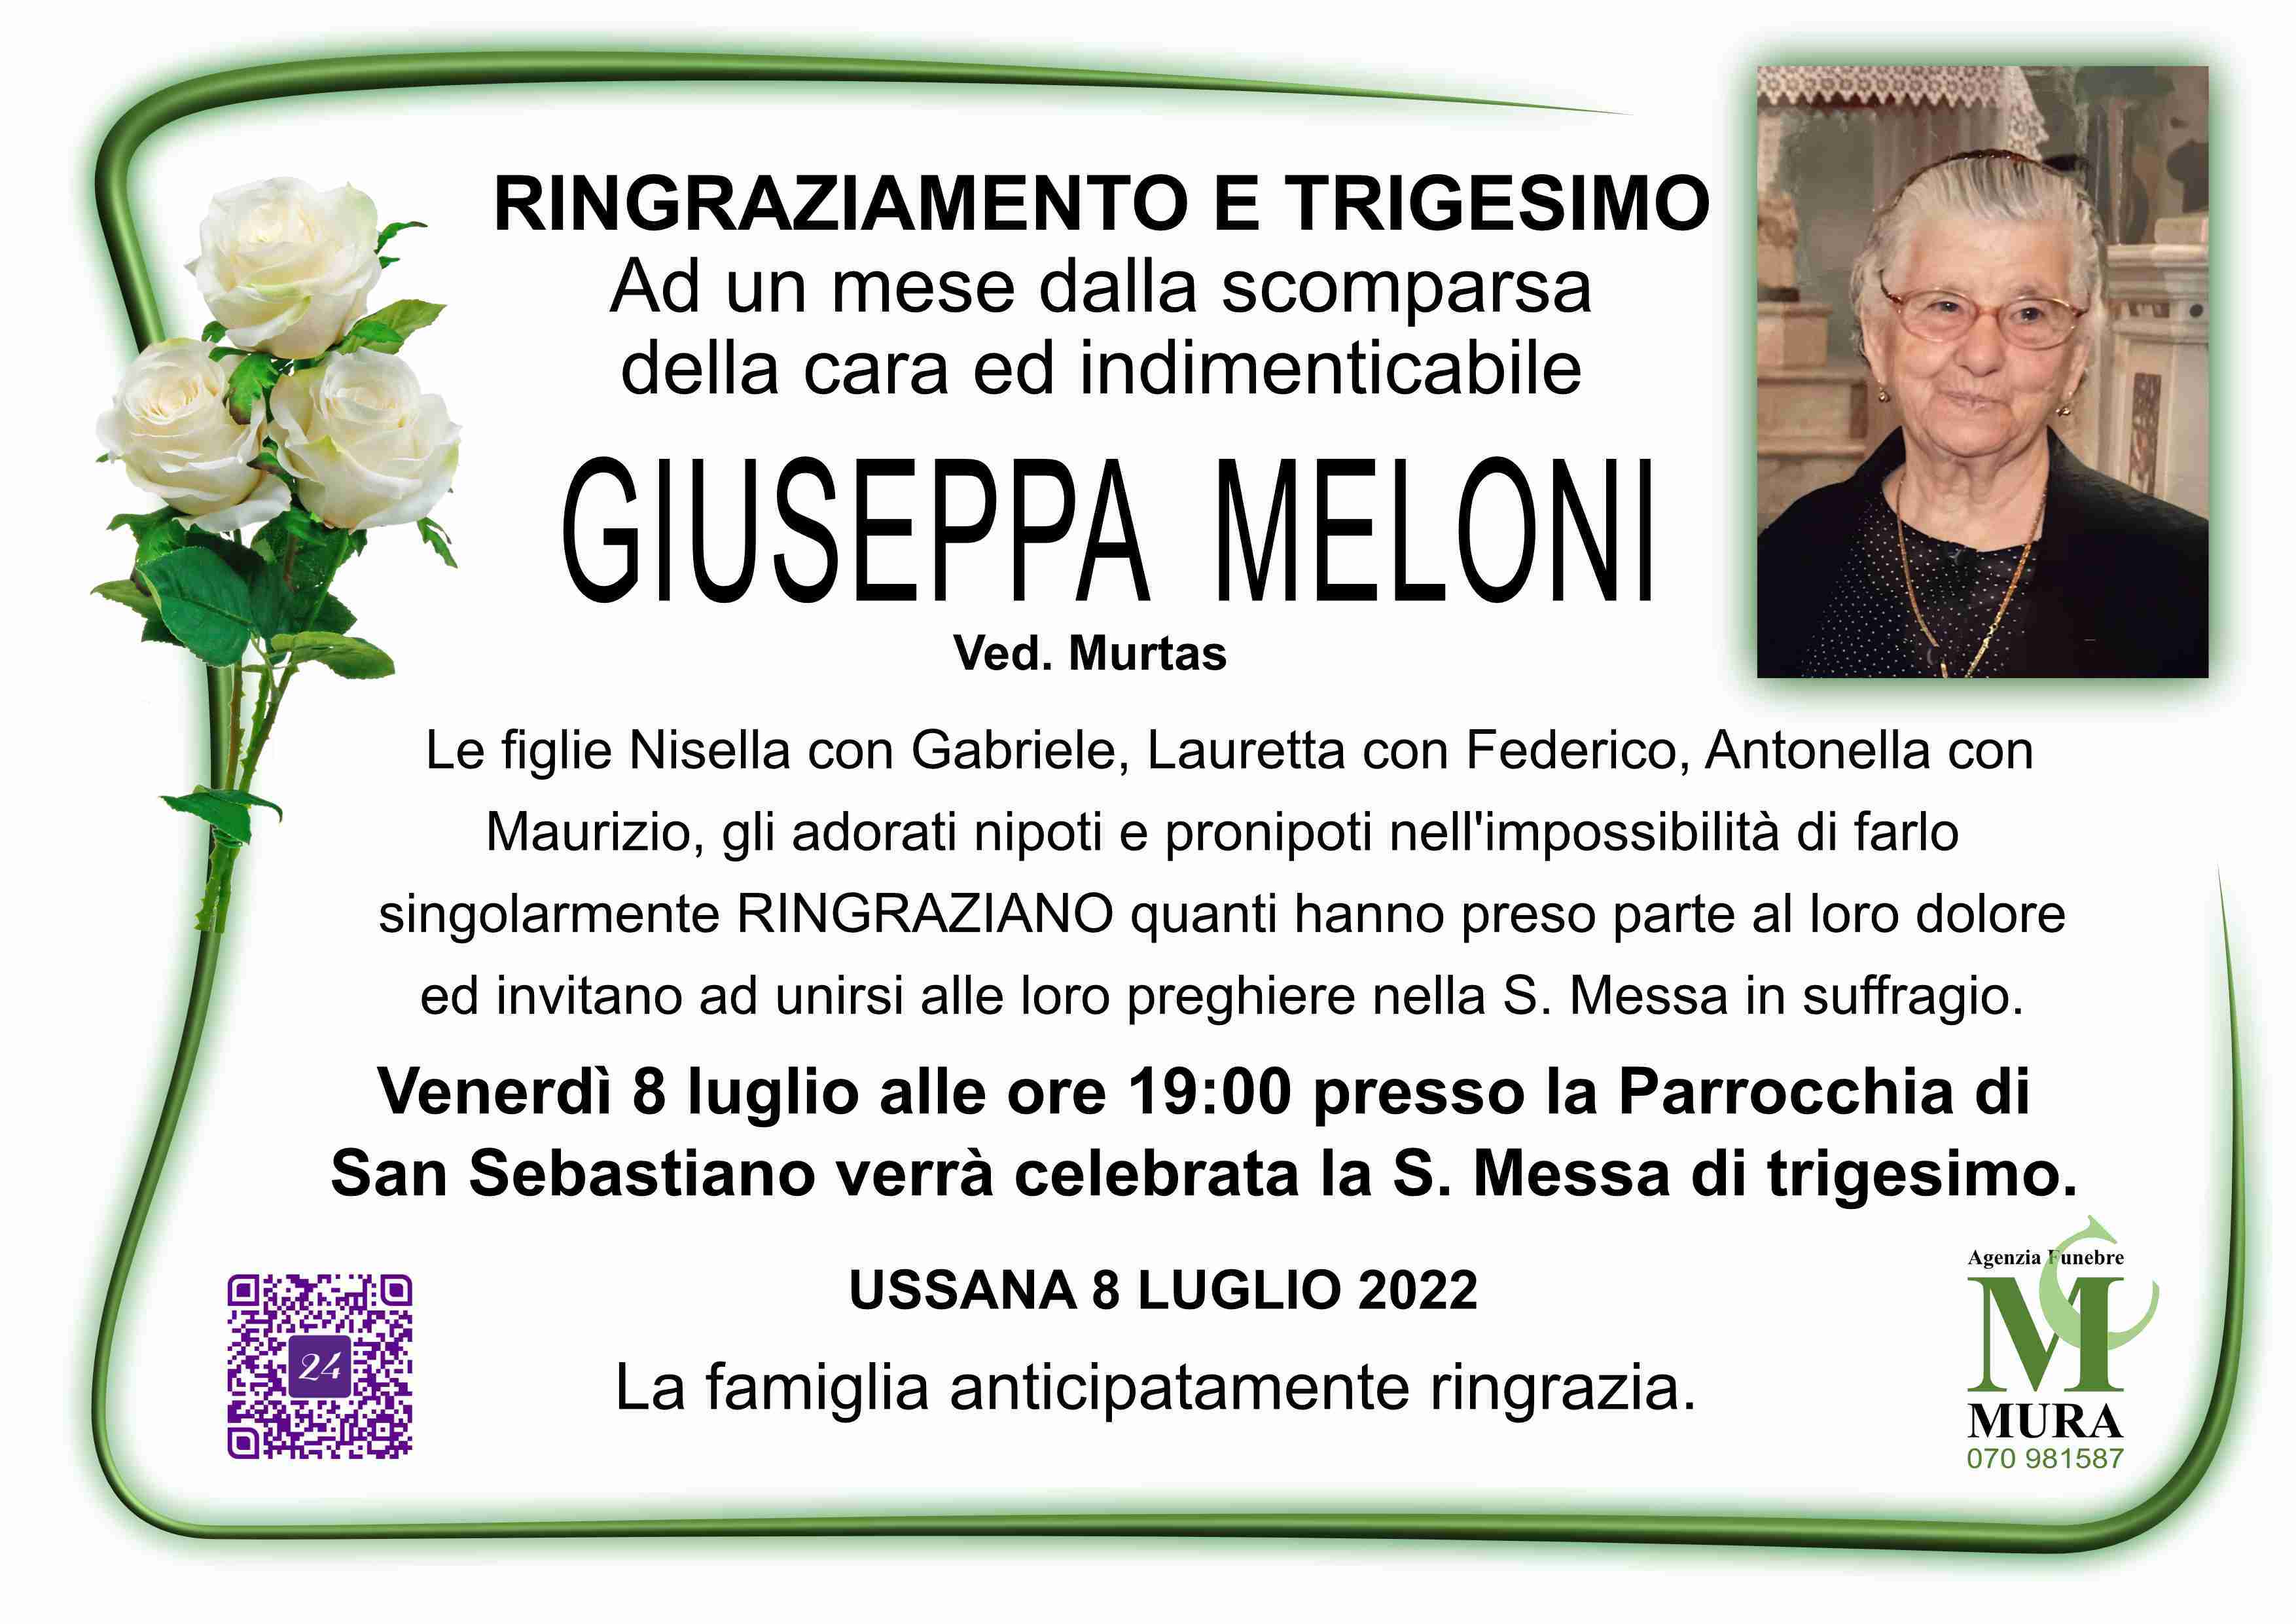 Giuseppa Meloni